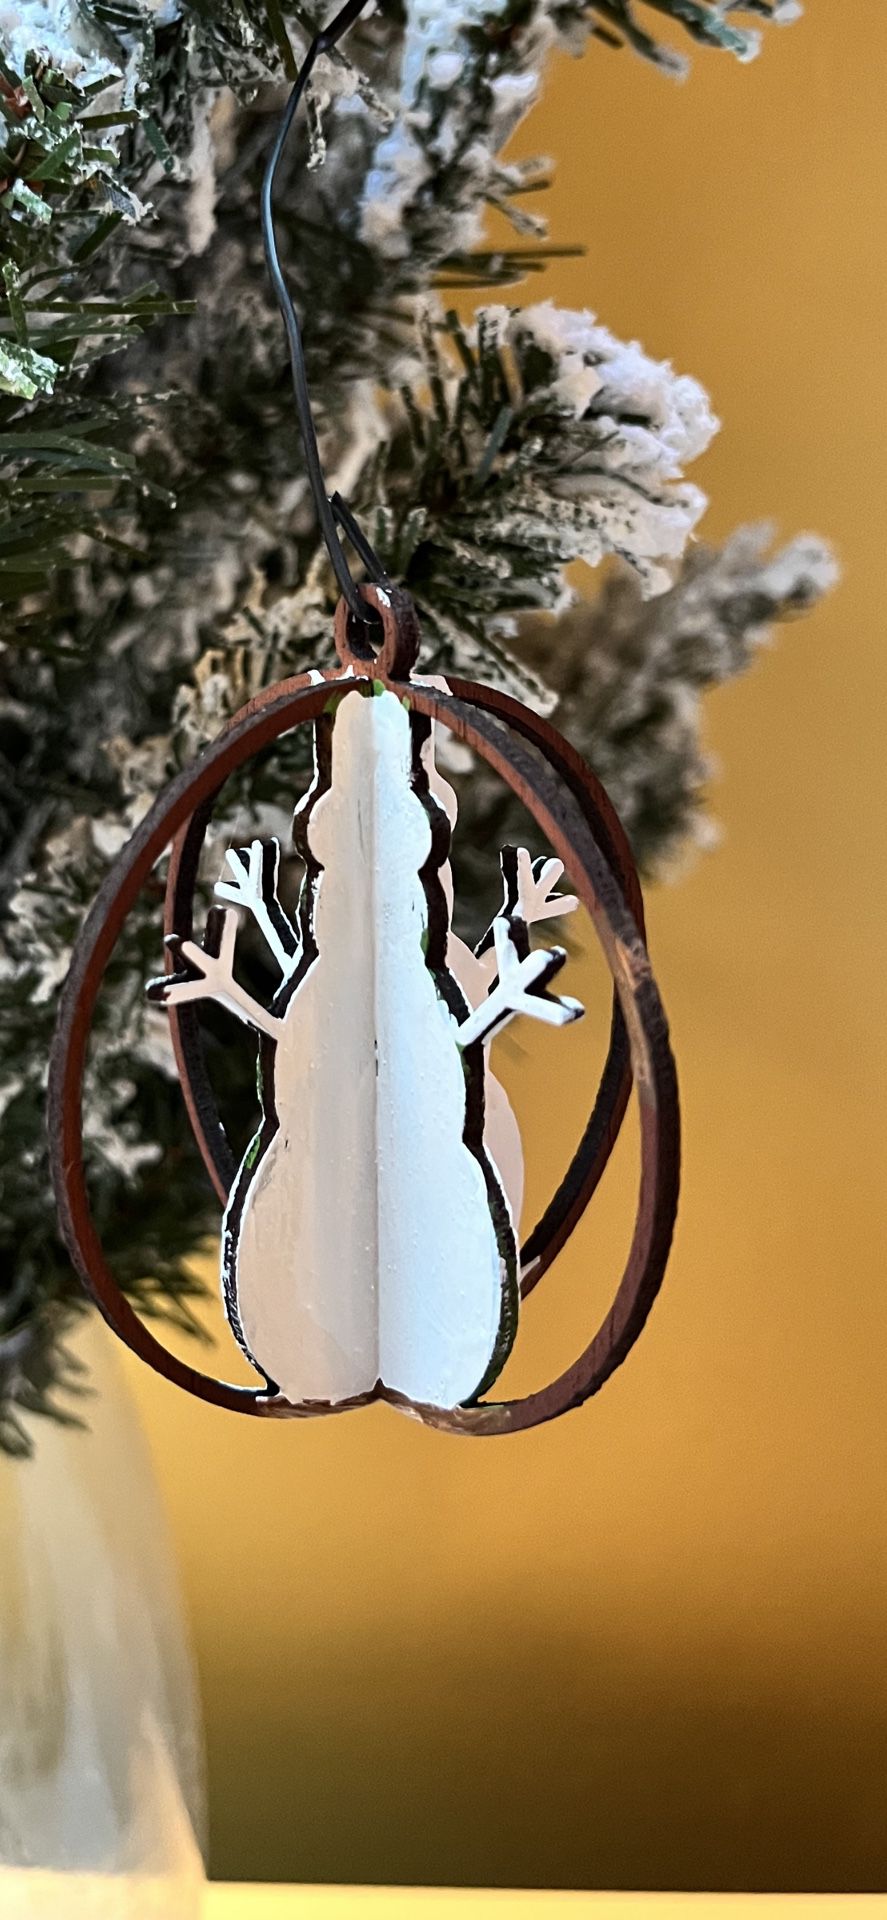 Wooden Christmas Ornament (snowman Design)